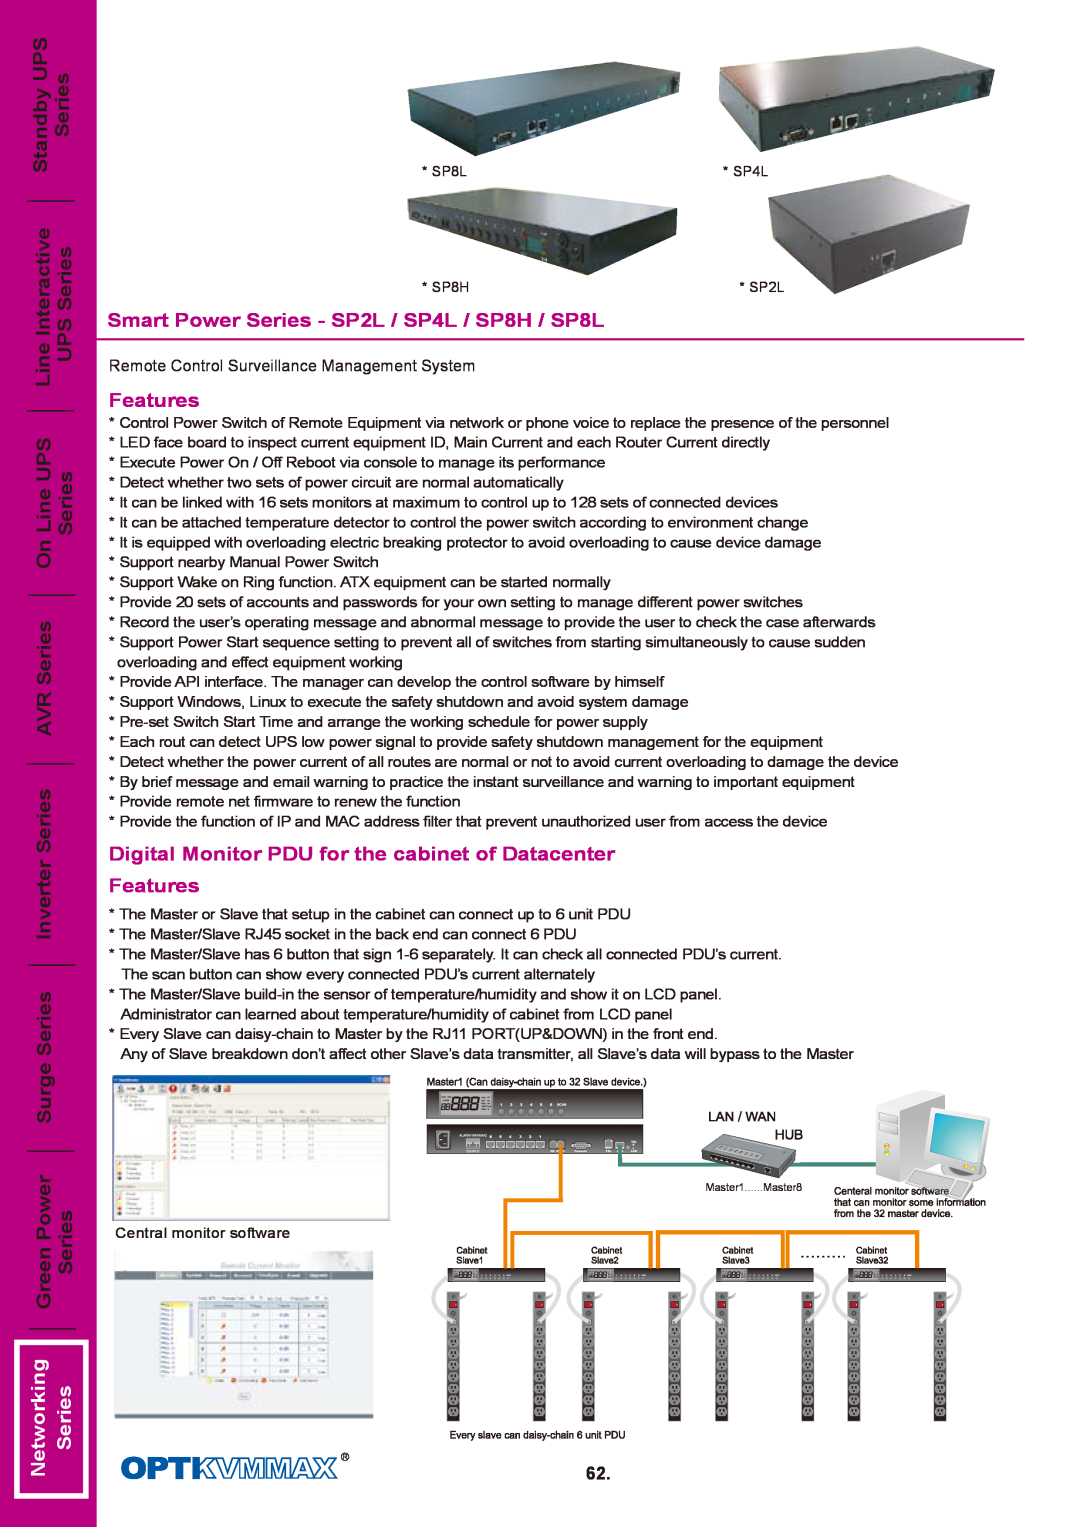 OPTI-UPS manual Networking, Smart Power Series - SP2L / SP4L / SP8H / SP8L, Features 